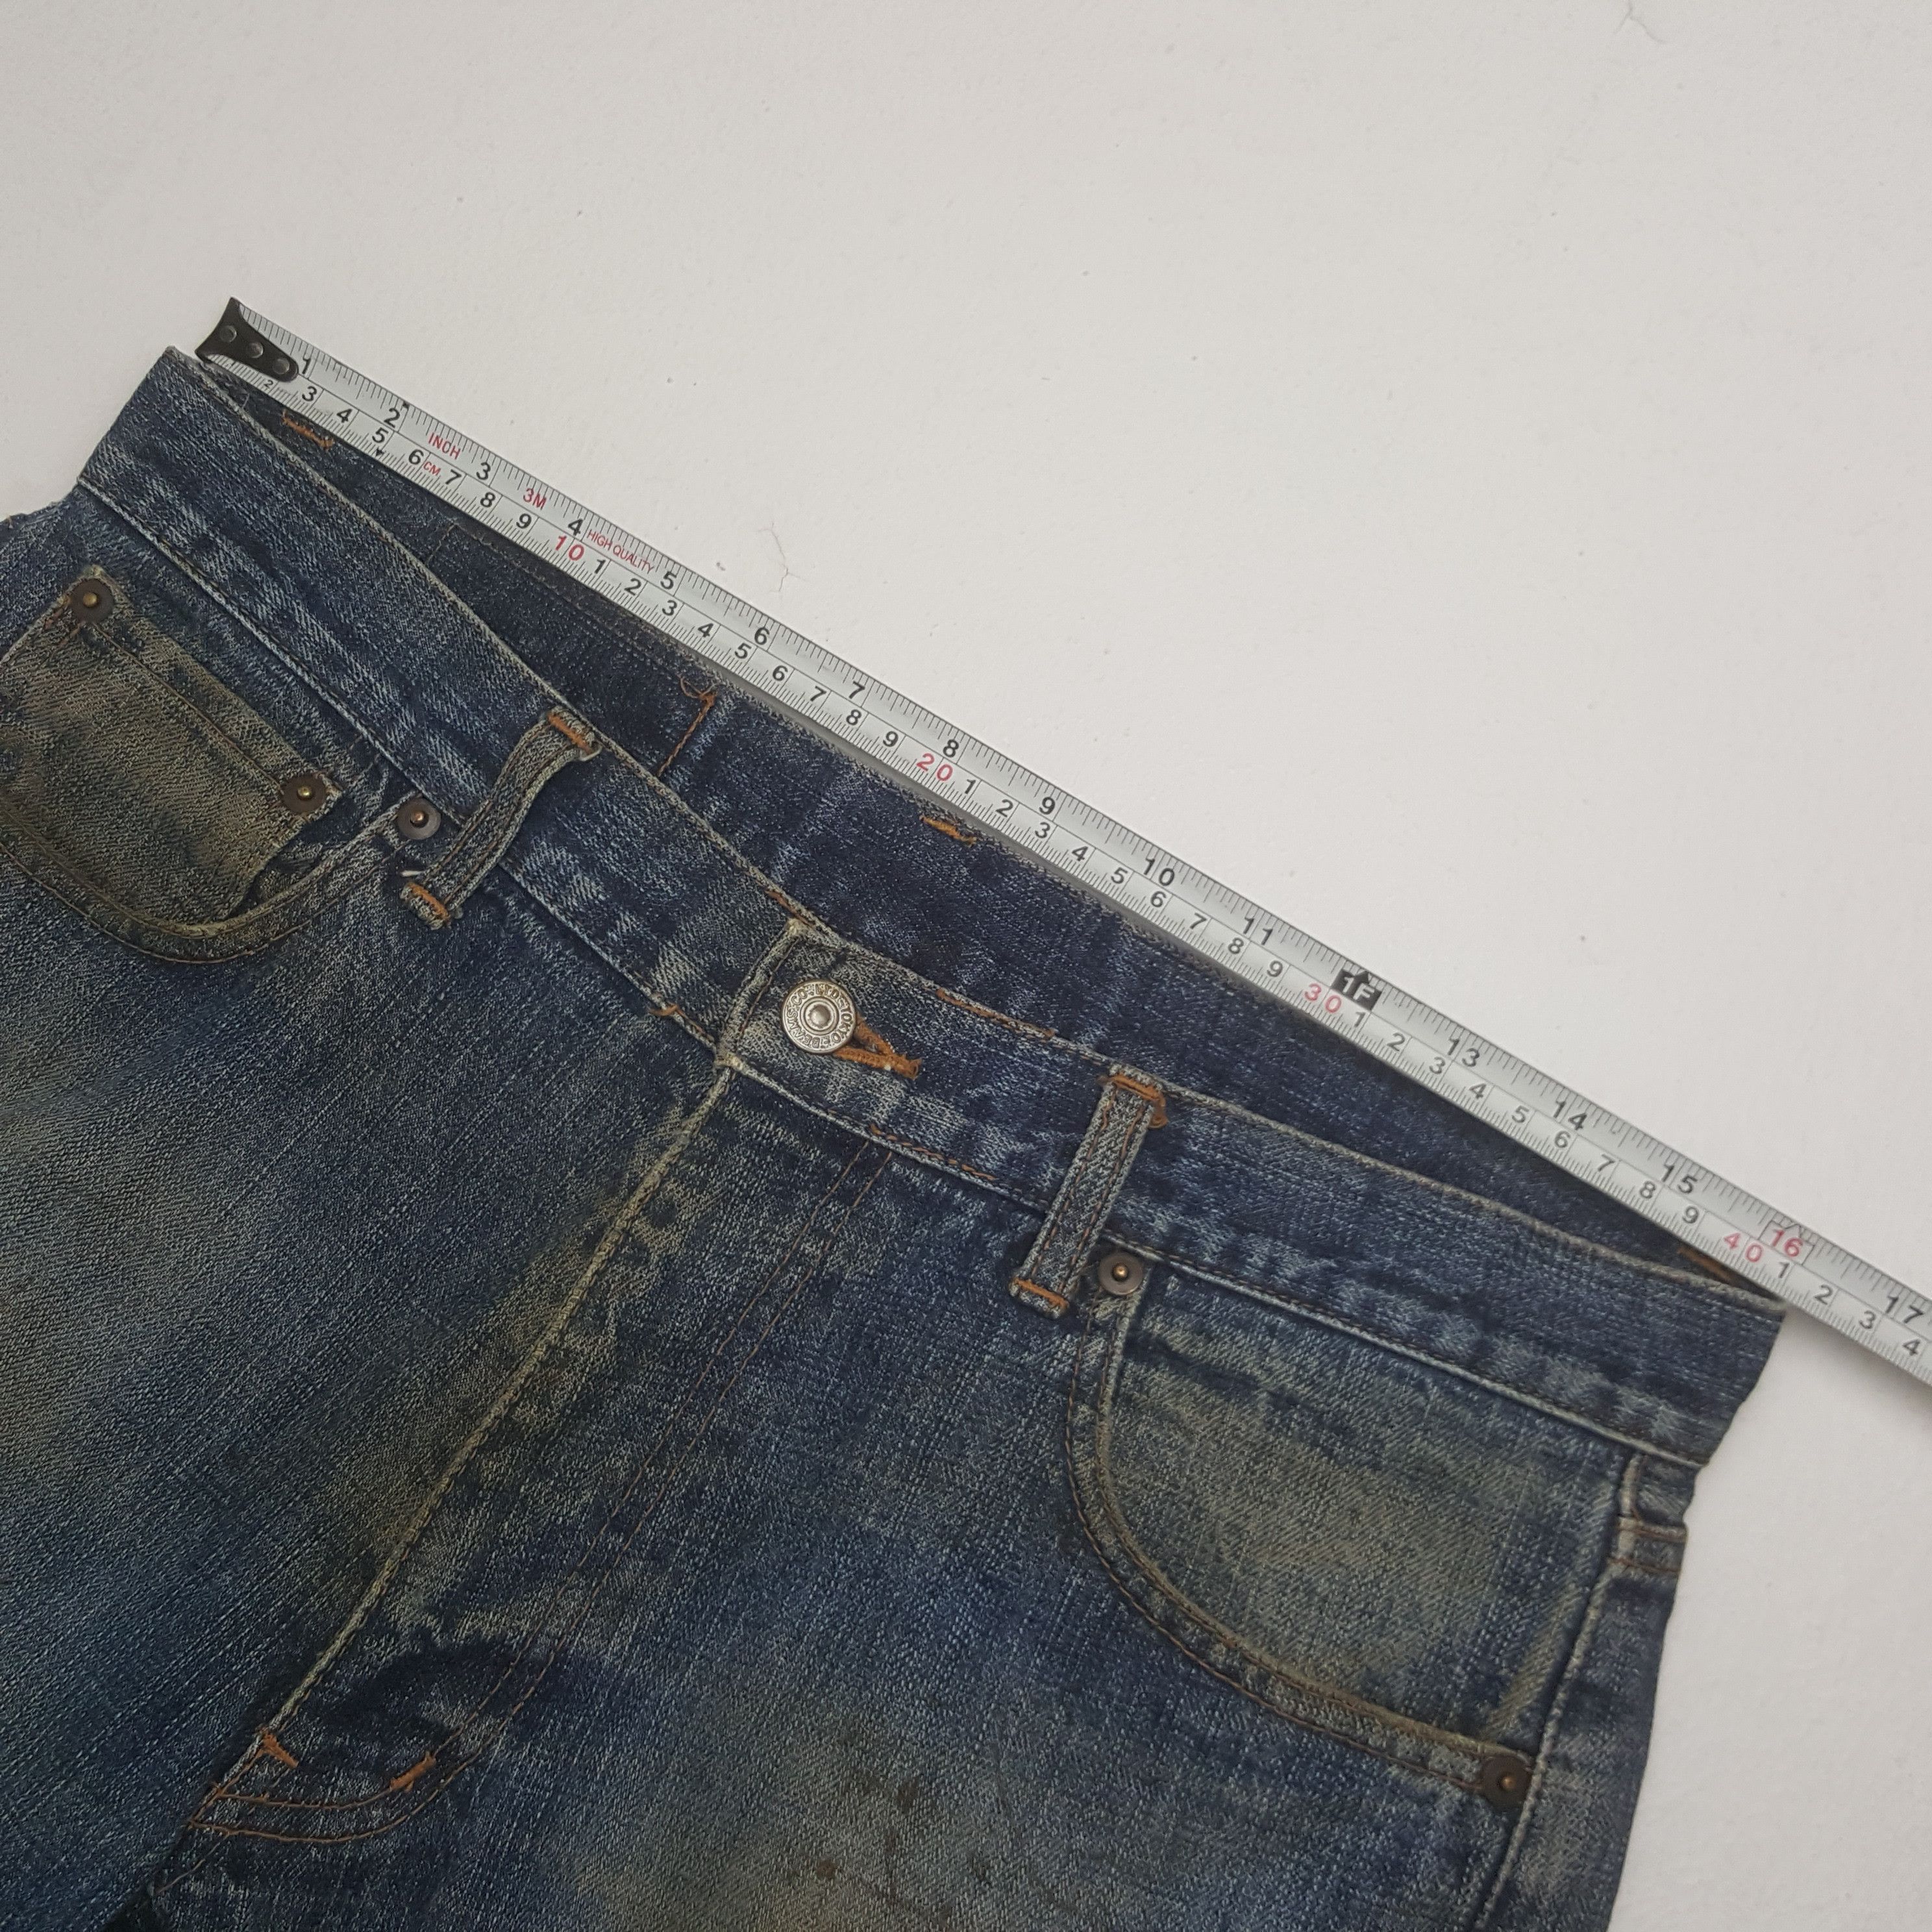 Vintage Vintage Beams Japanese Brand Distressed Shorts Denim Jeans Size US 32 / EU 48 - 9 Thumbnail